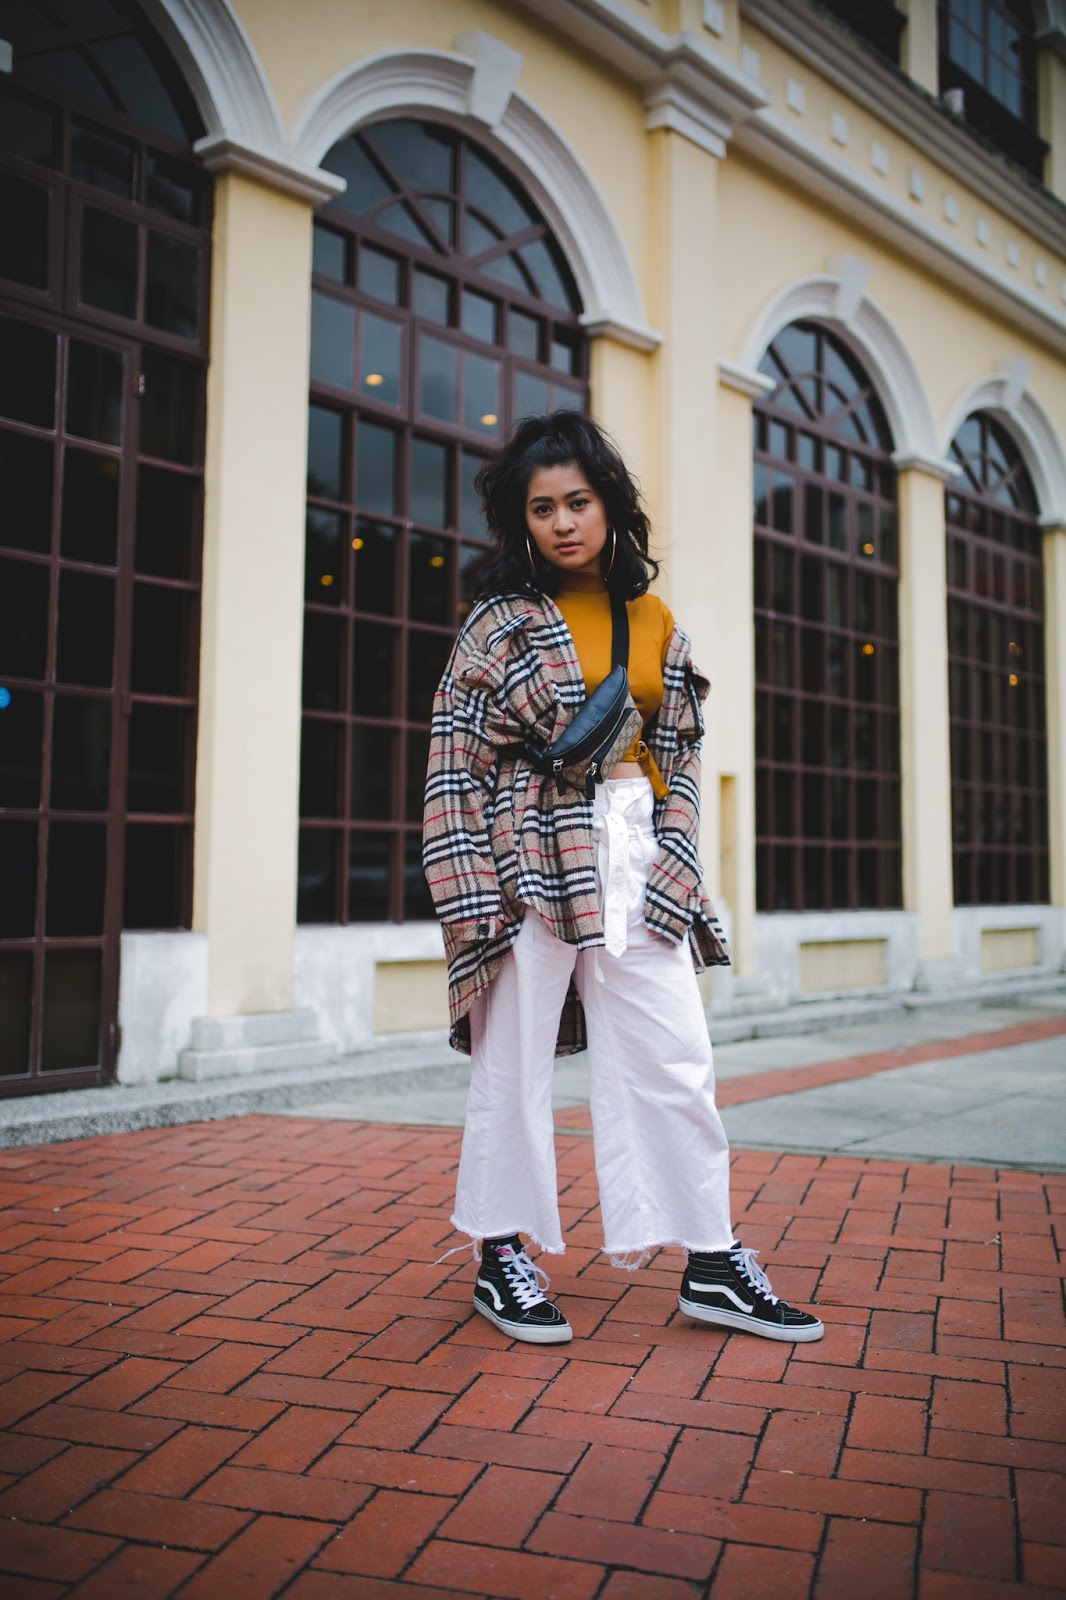 Macau Fashion blogger wearing burberry and gucci